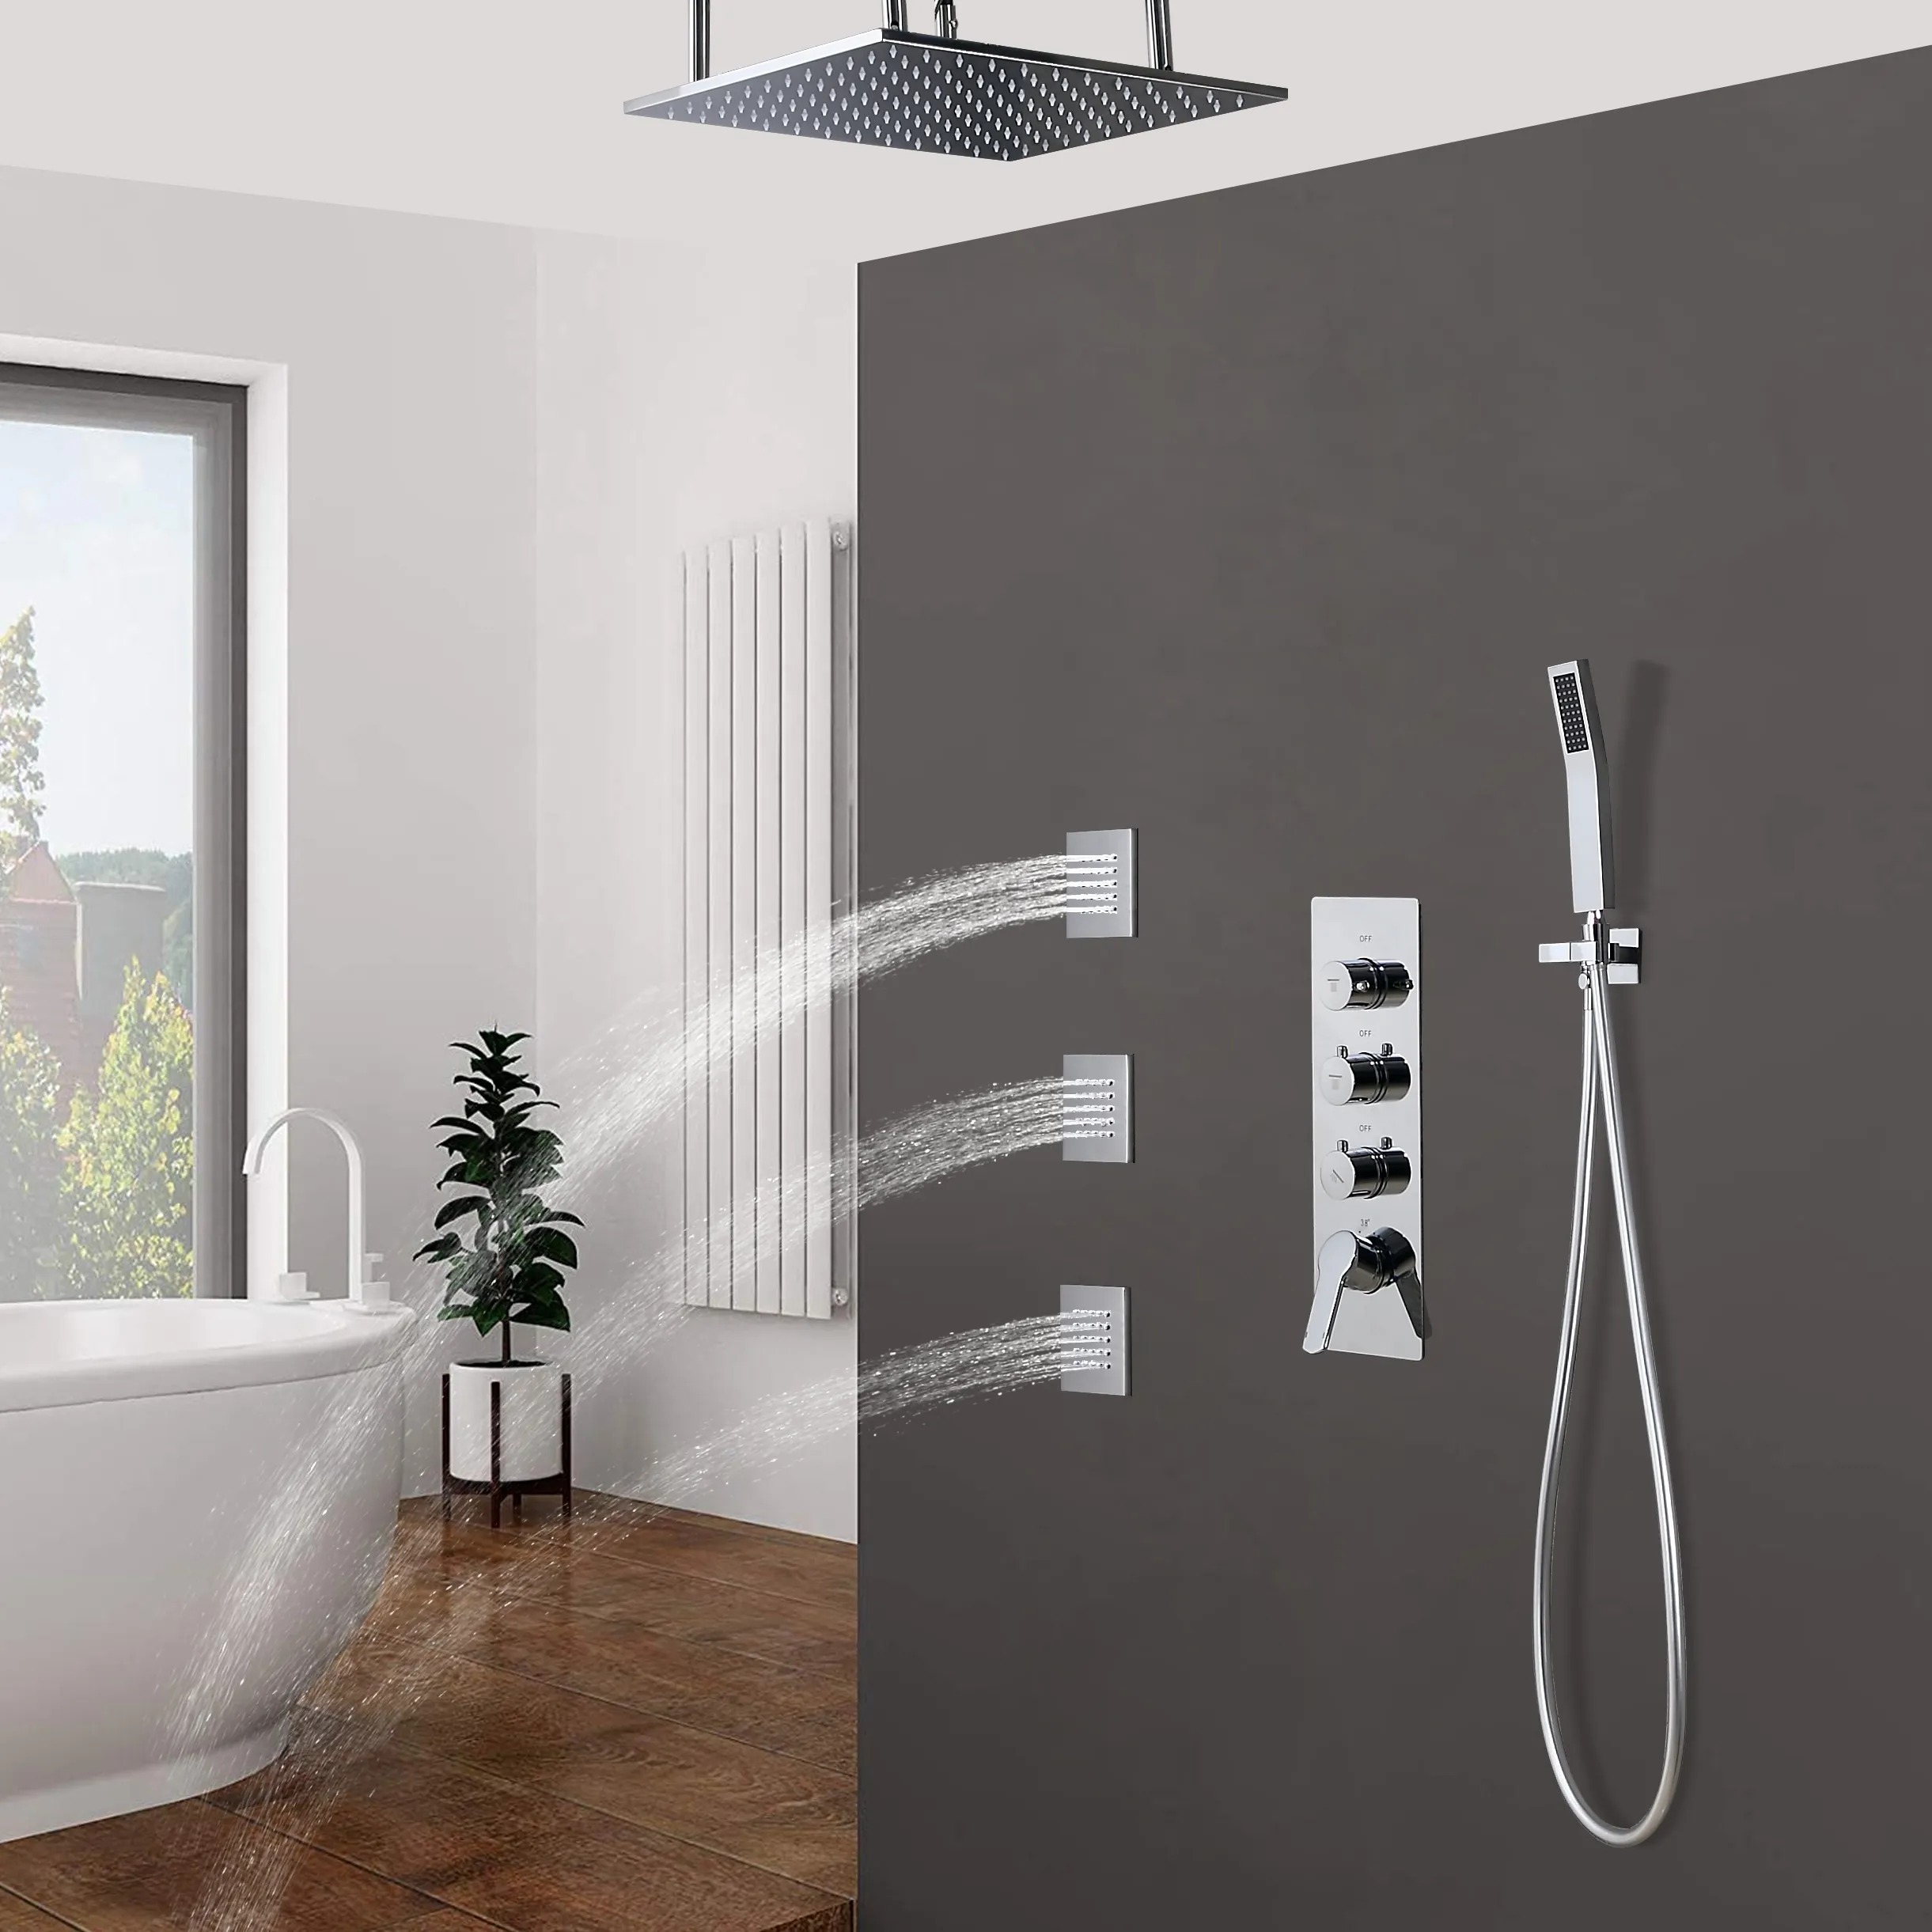 Modern 16" Chrome Rain Shower System with Handheld Shower & 3 Body Sprays